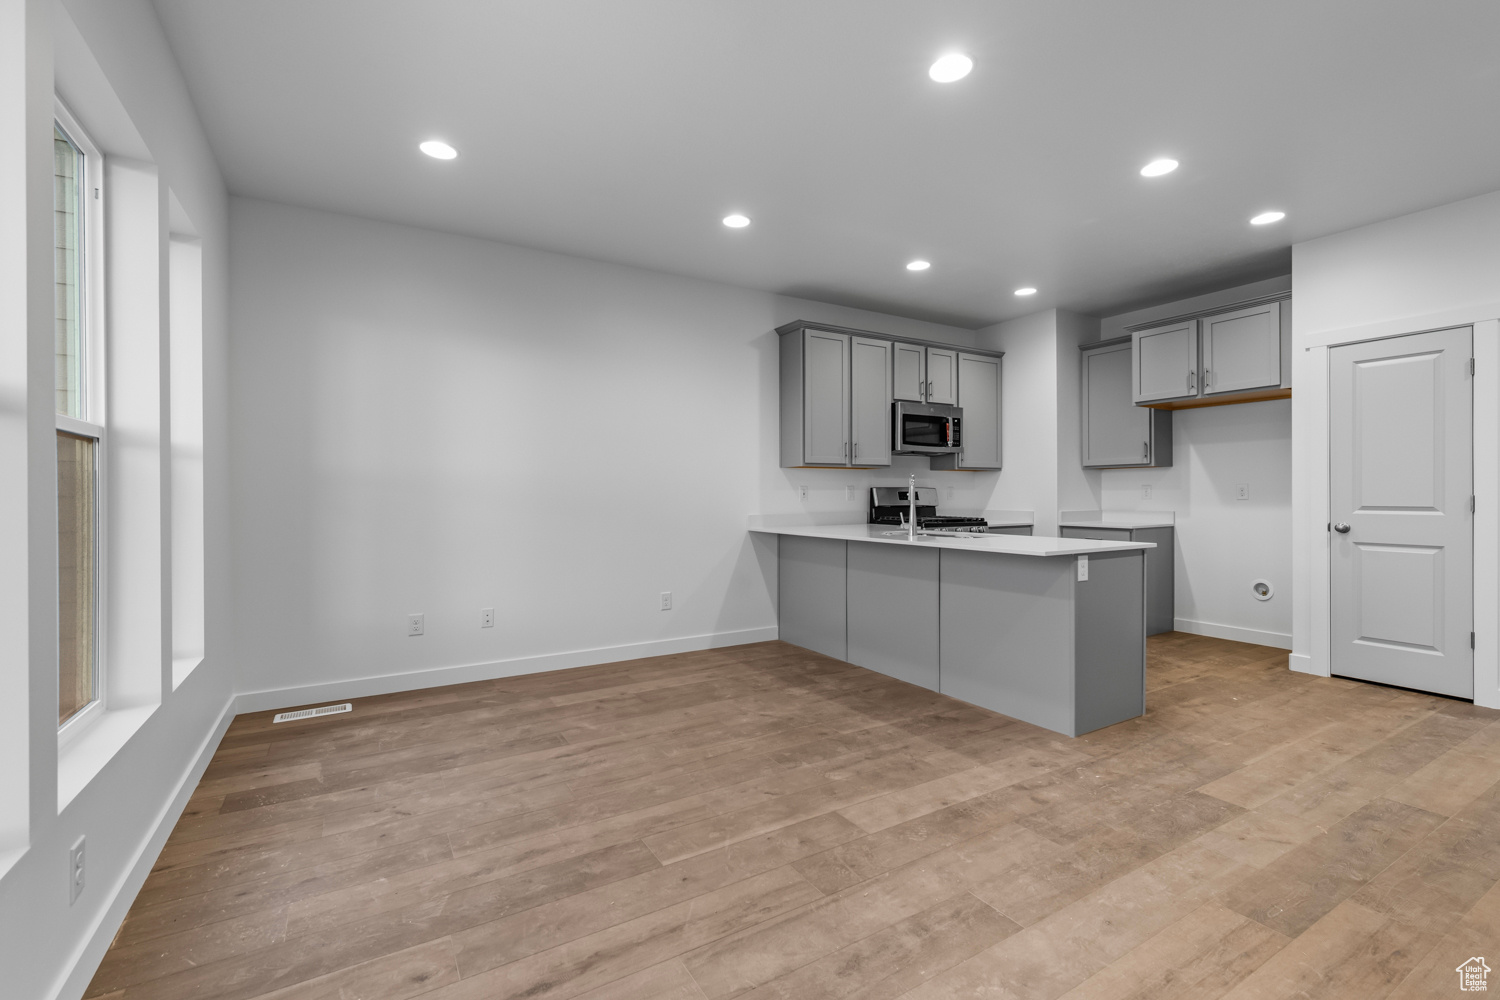 Kitchen with kitchen peninsula, light hardwood / wood-style flooring, a healthy amount of sunlight, and gas range